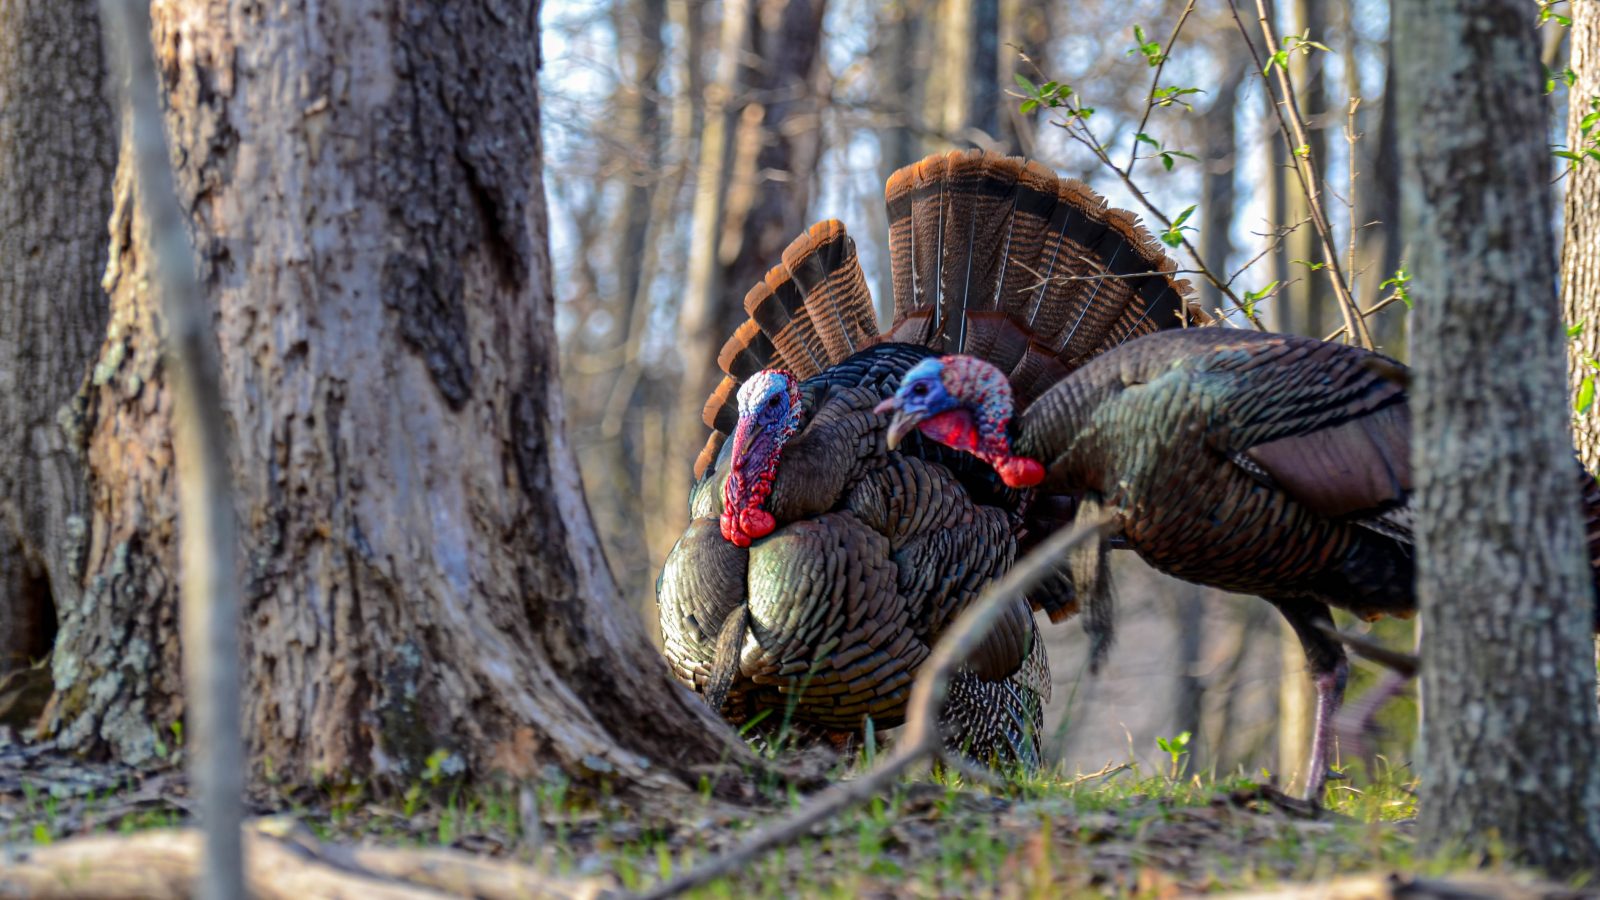 Second split of WV's fall turkey season to open Oct. 25 West Virginia